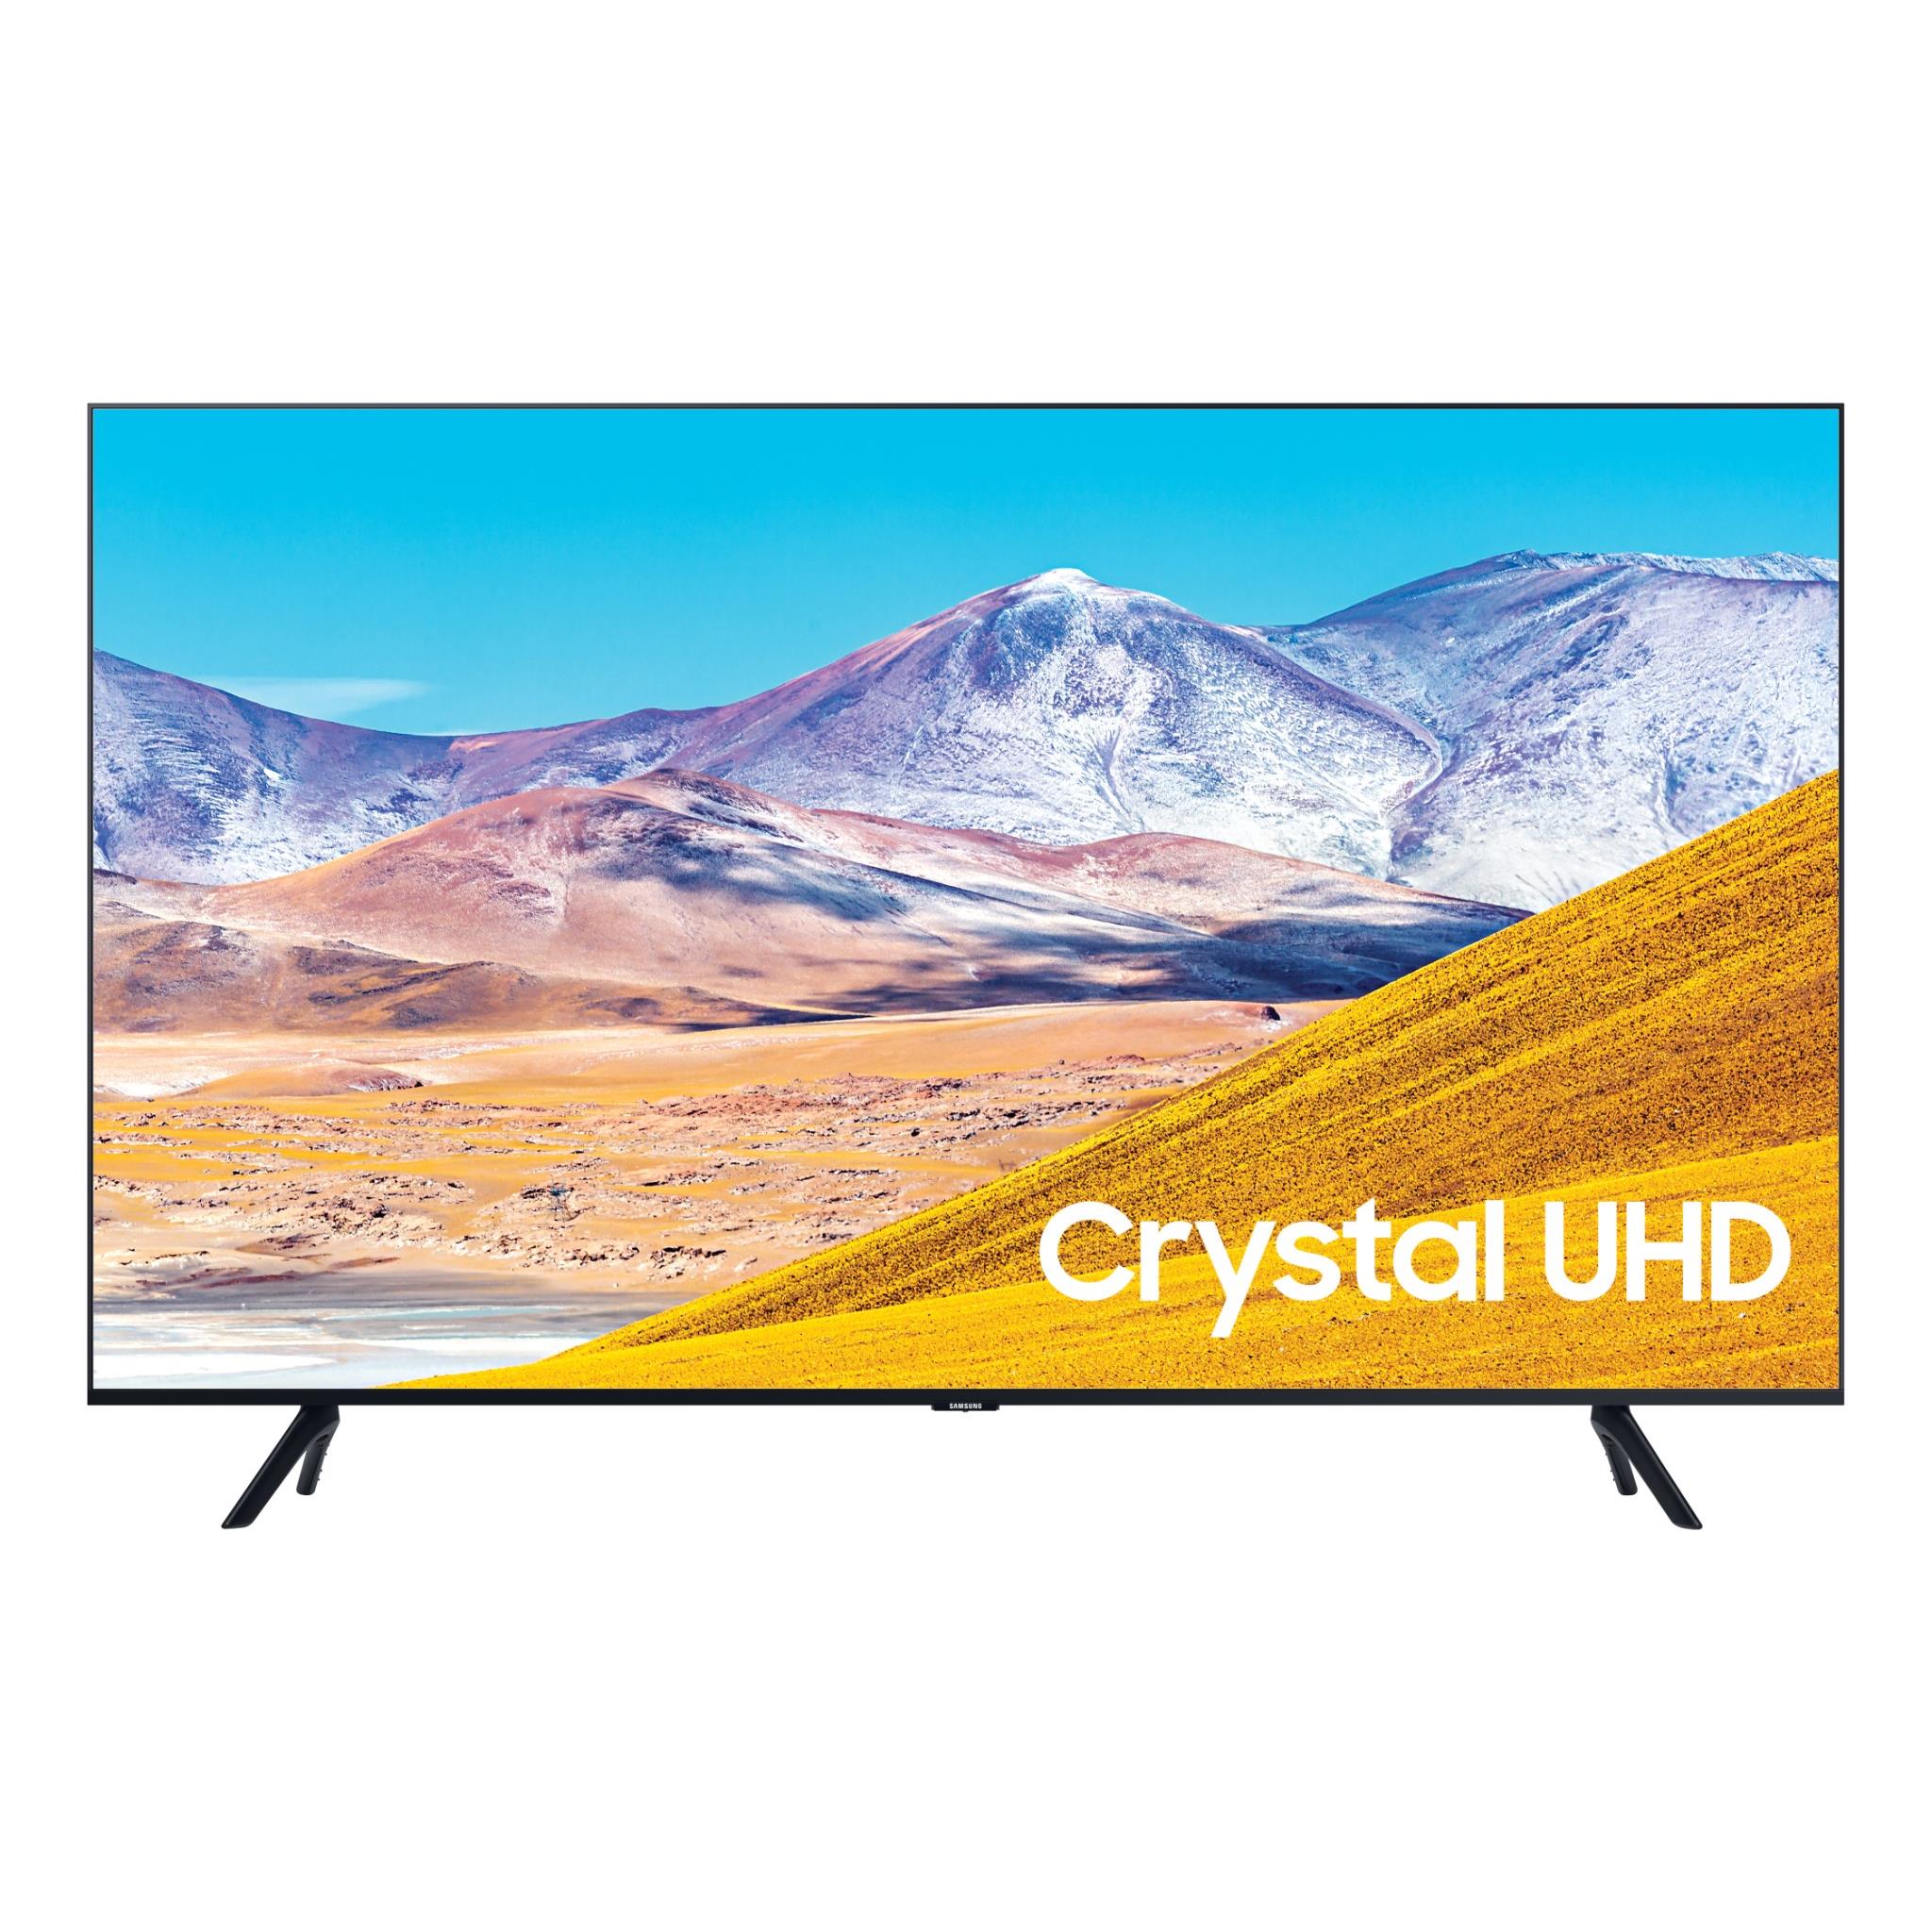 samsung tu8000 82" crystal uhd 4k smart tv 2020 [^refurbished]